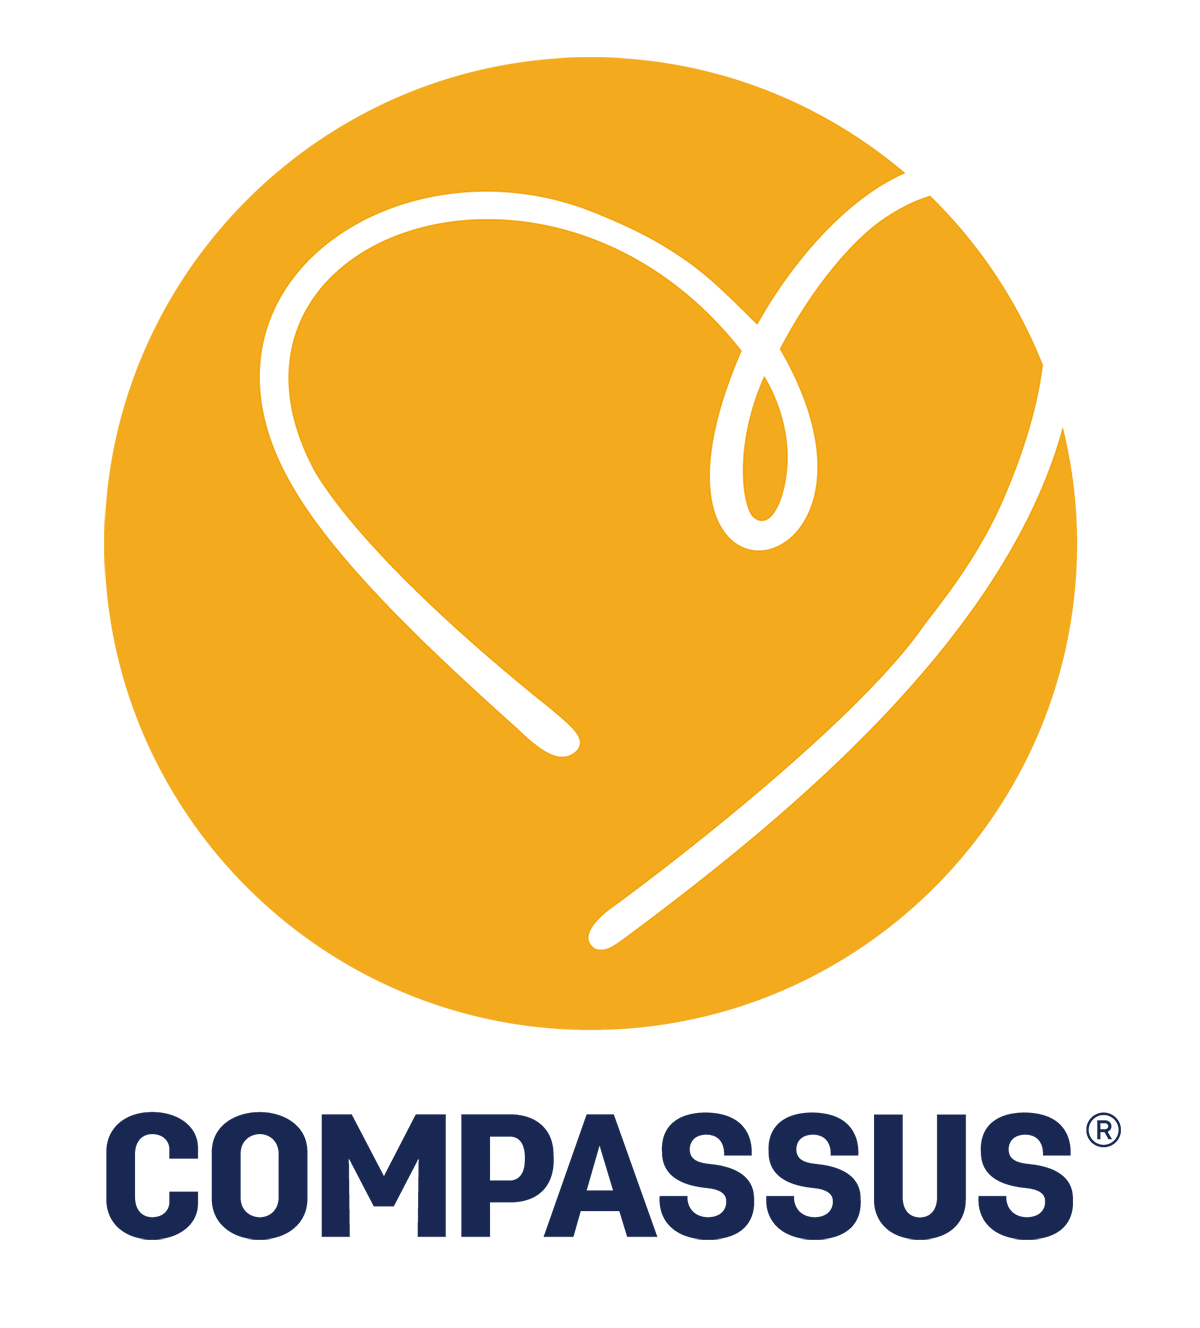 Hospice Compassus logo